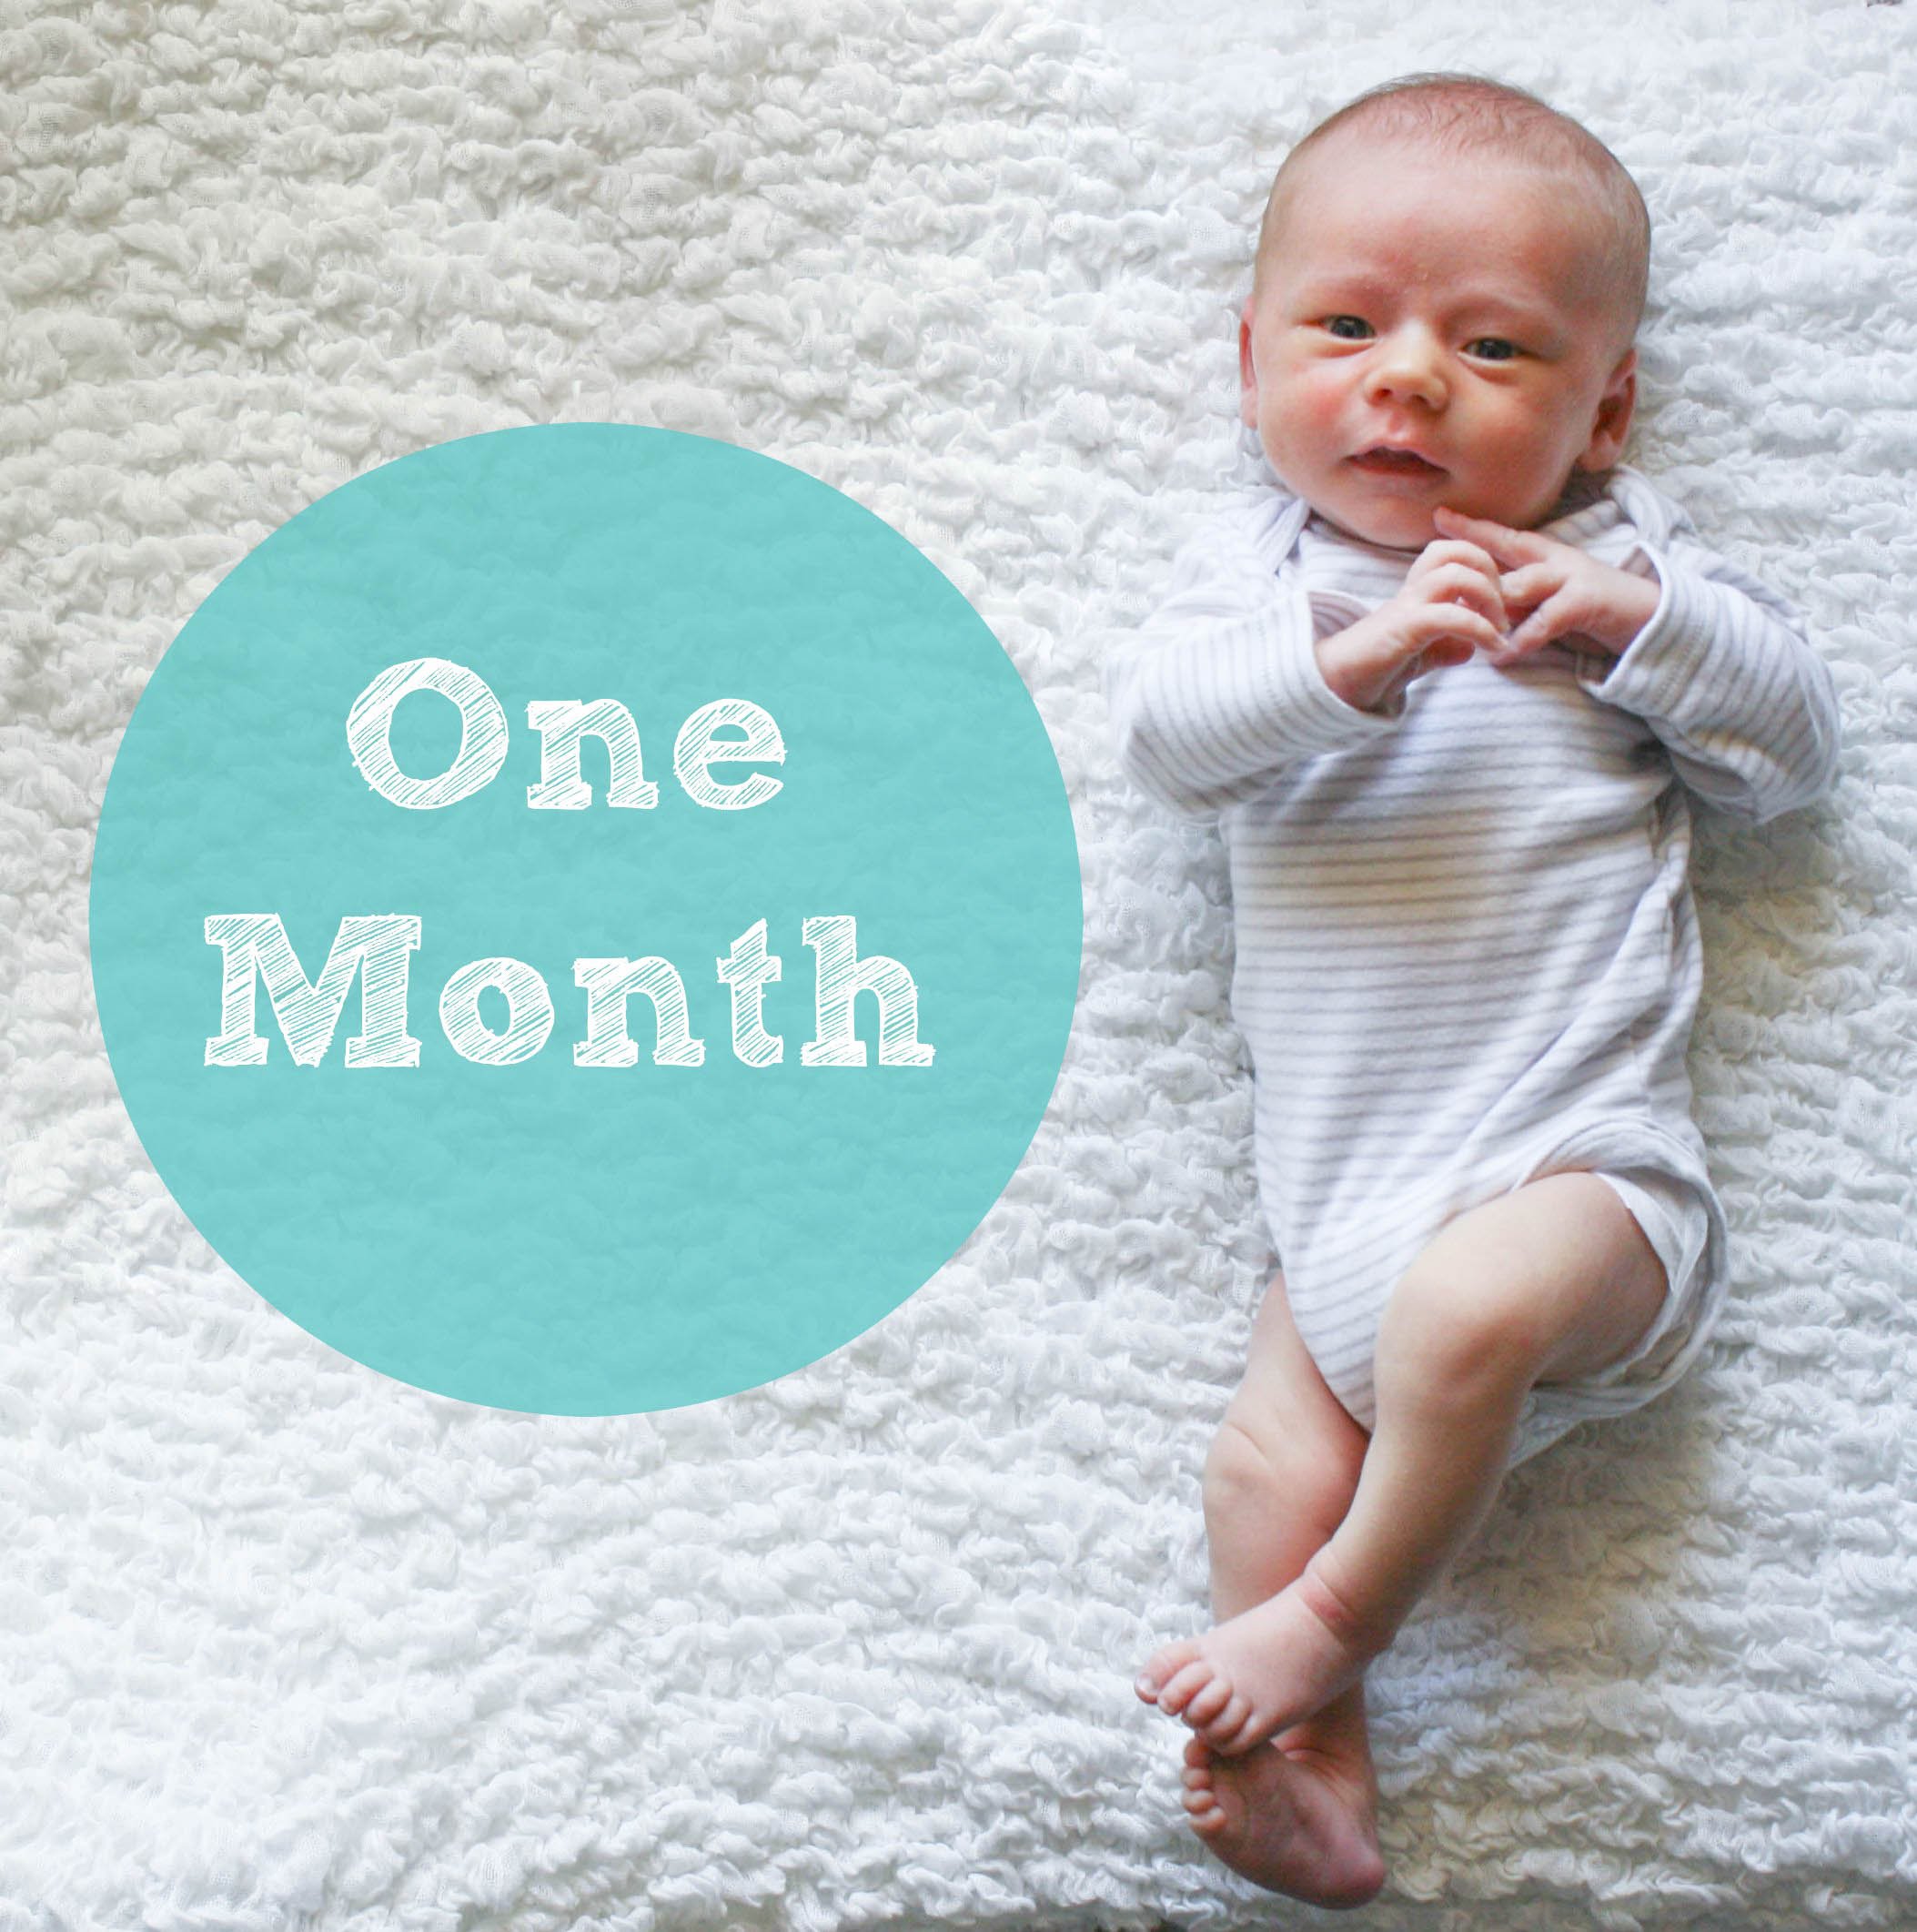 Месяц ребенку статус. Месяц малышу. Поздравление с 1 месяцем. Фотосессия 3 месяца. 1 Месяц ребенку.